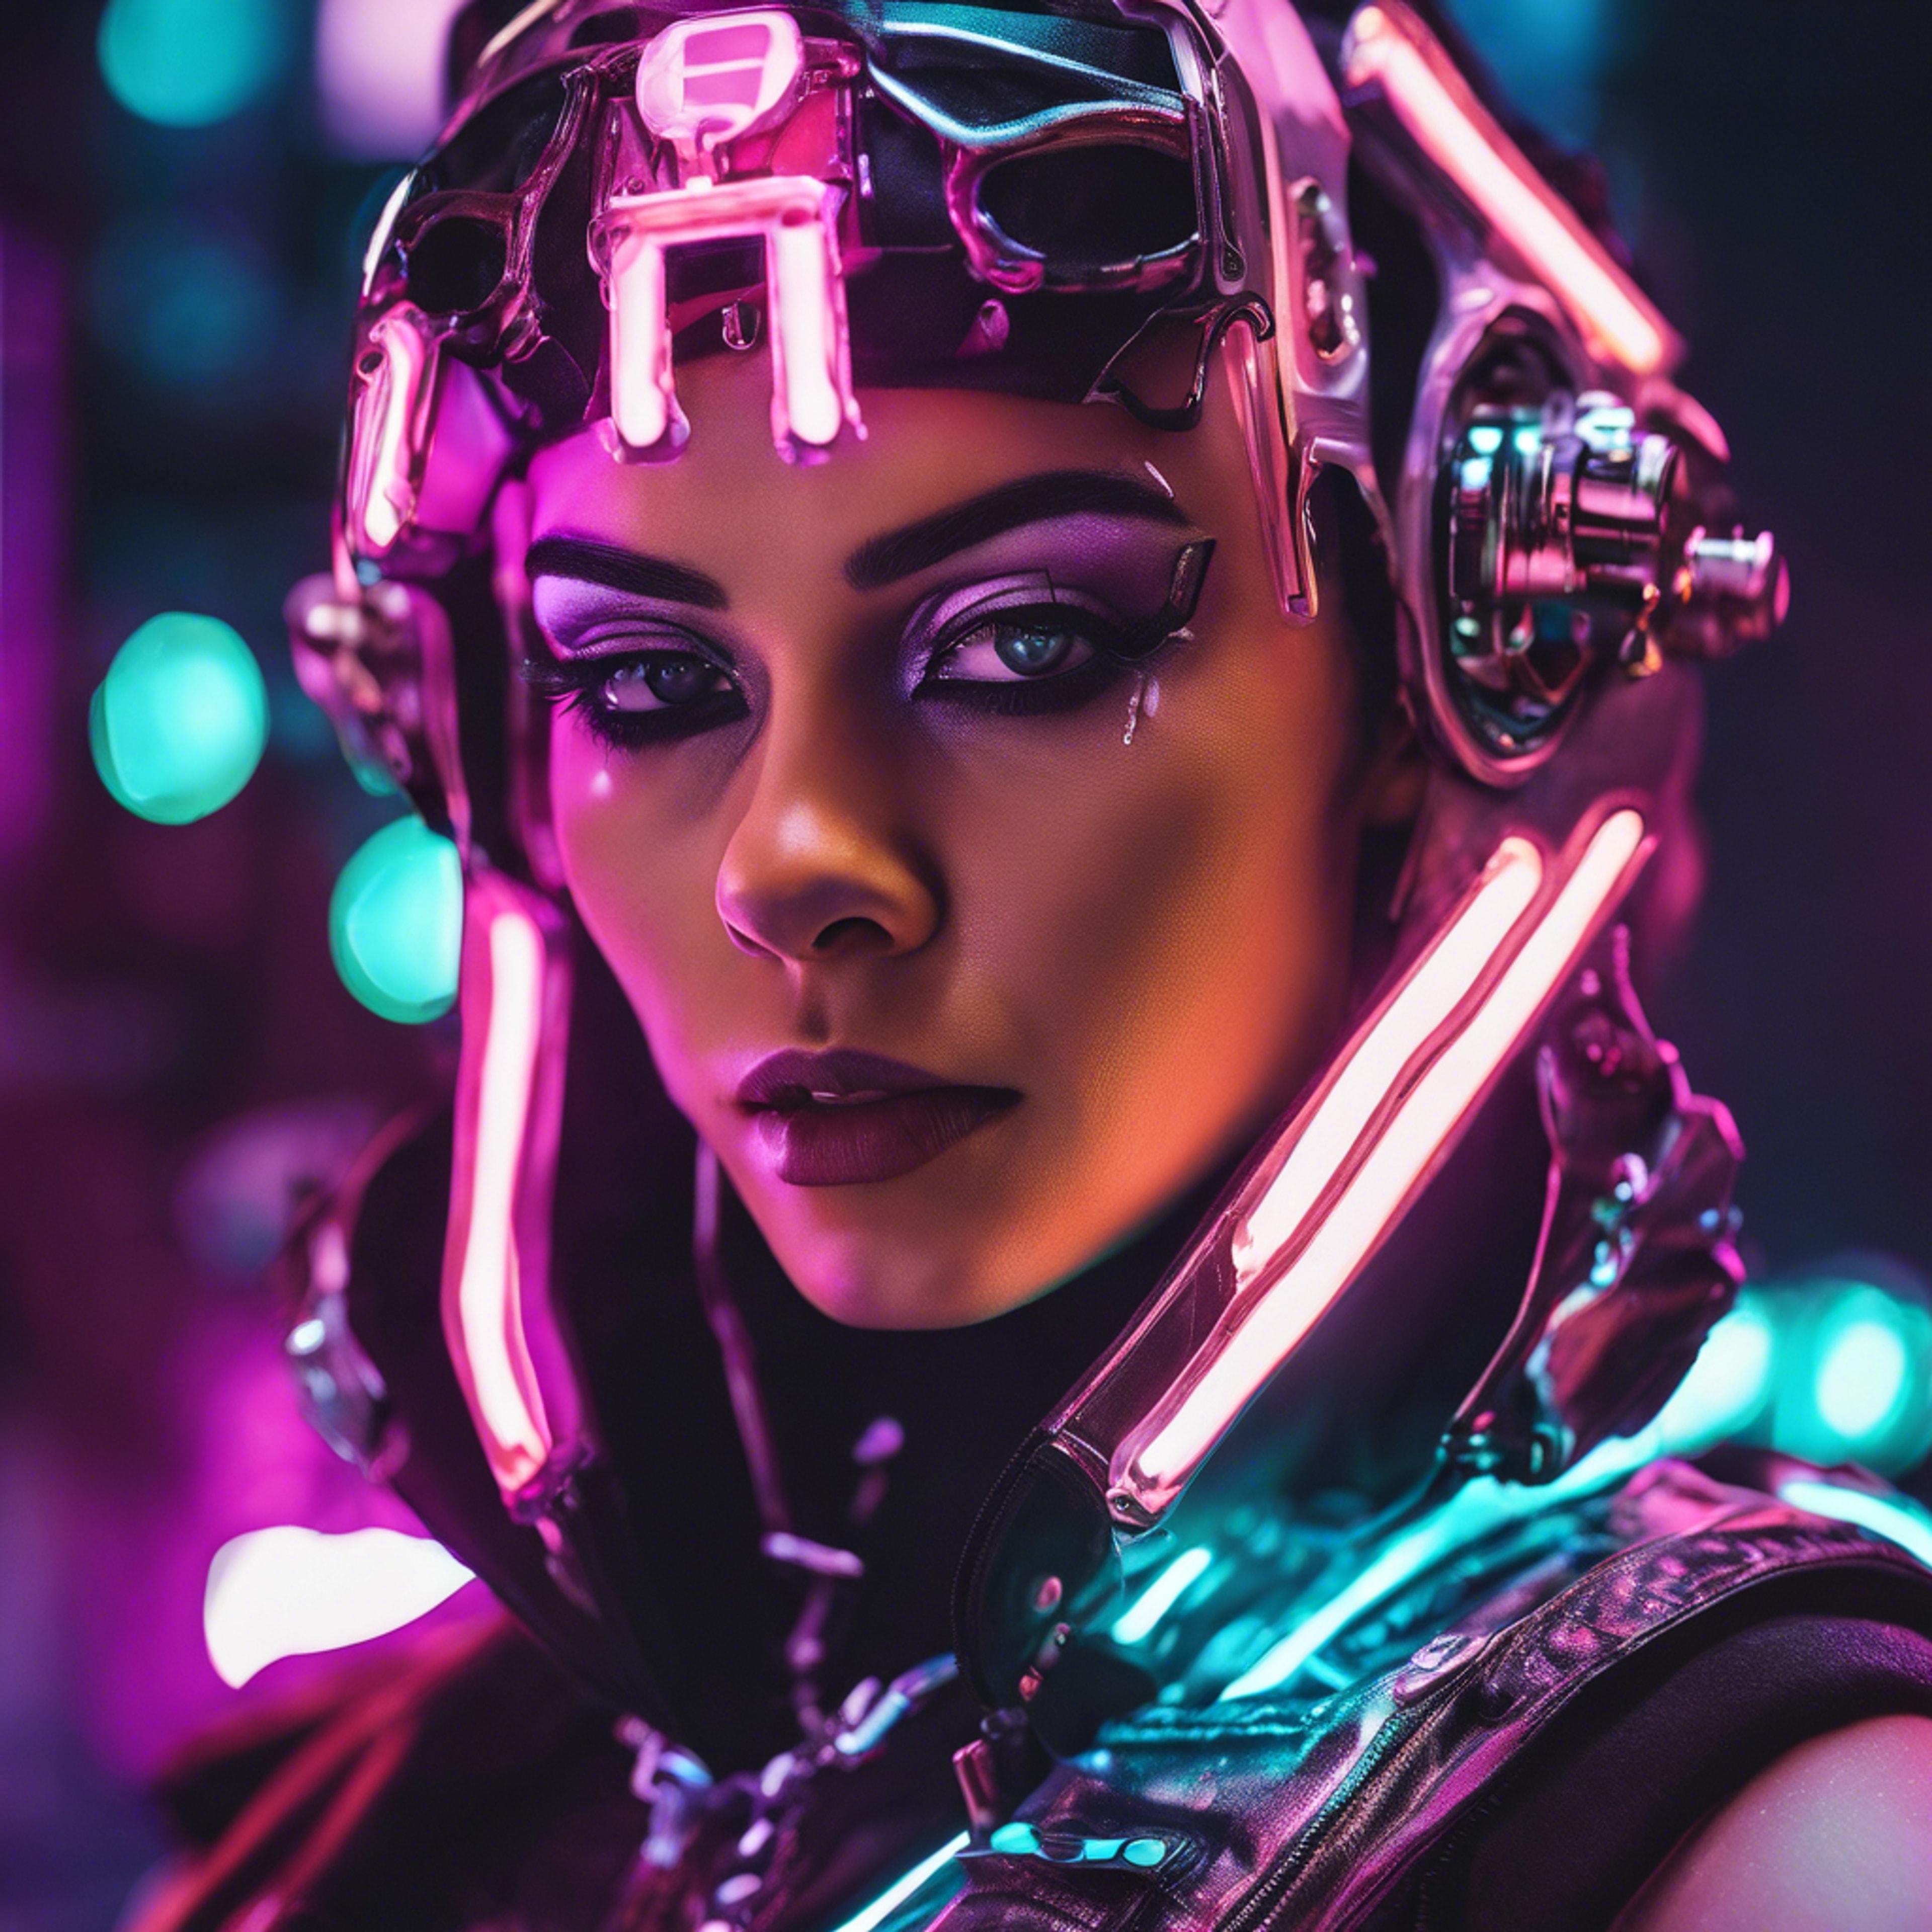 A close-up portrait of a cyberpunk baddie in neon lighting, metal piercings, and sci-fi-inspired makeup. Шпалери[9ac0123c92044077bebc]